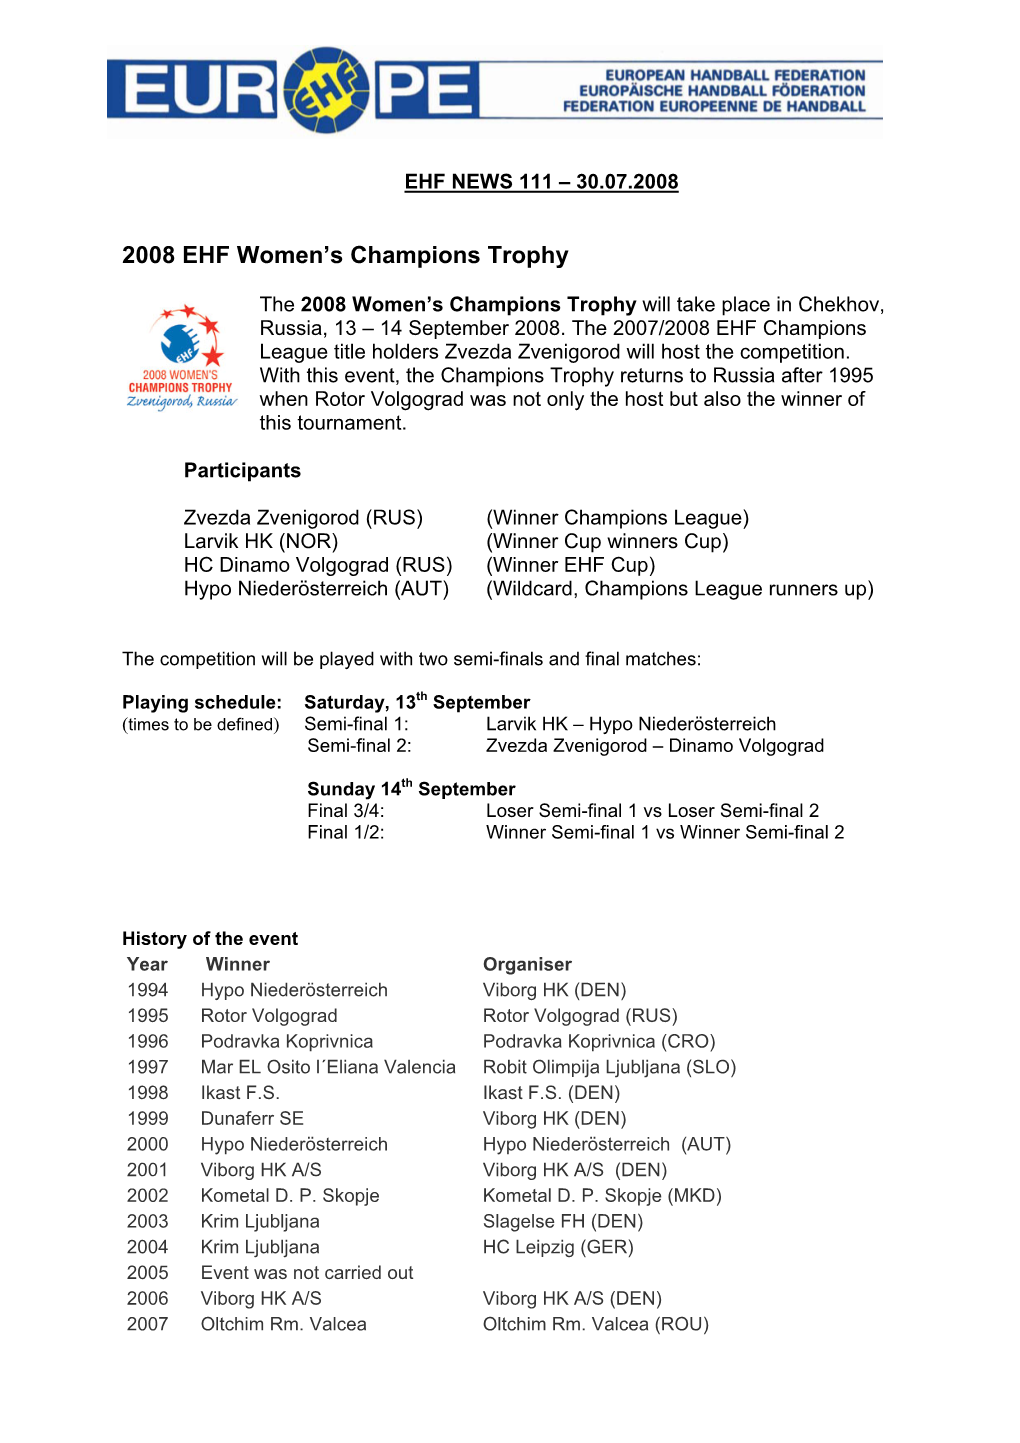 2008 EHF Women's Champions Trophy